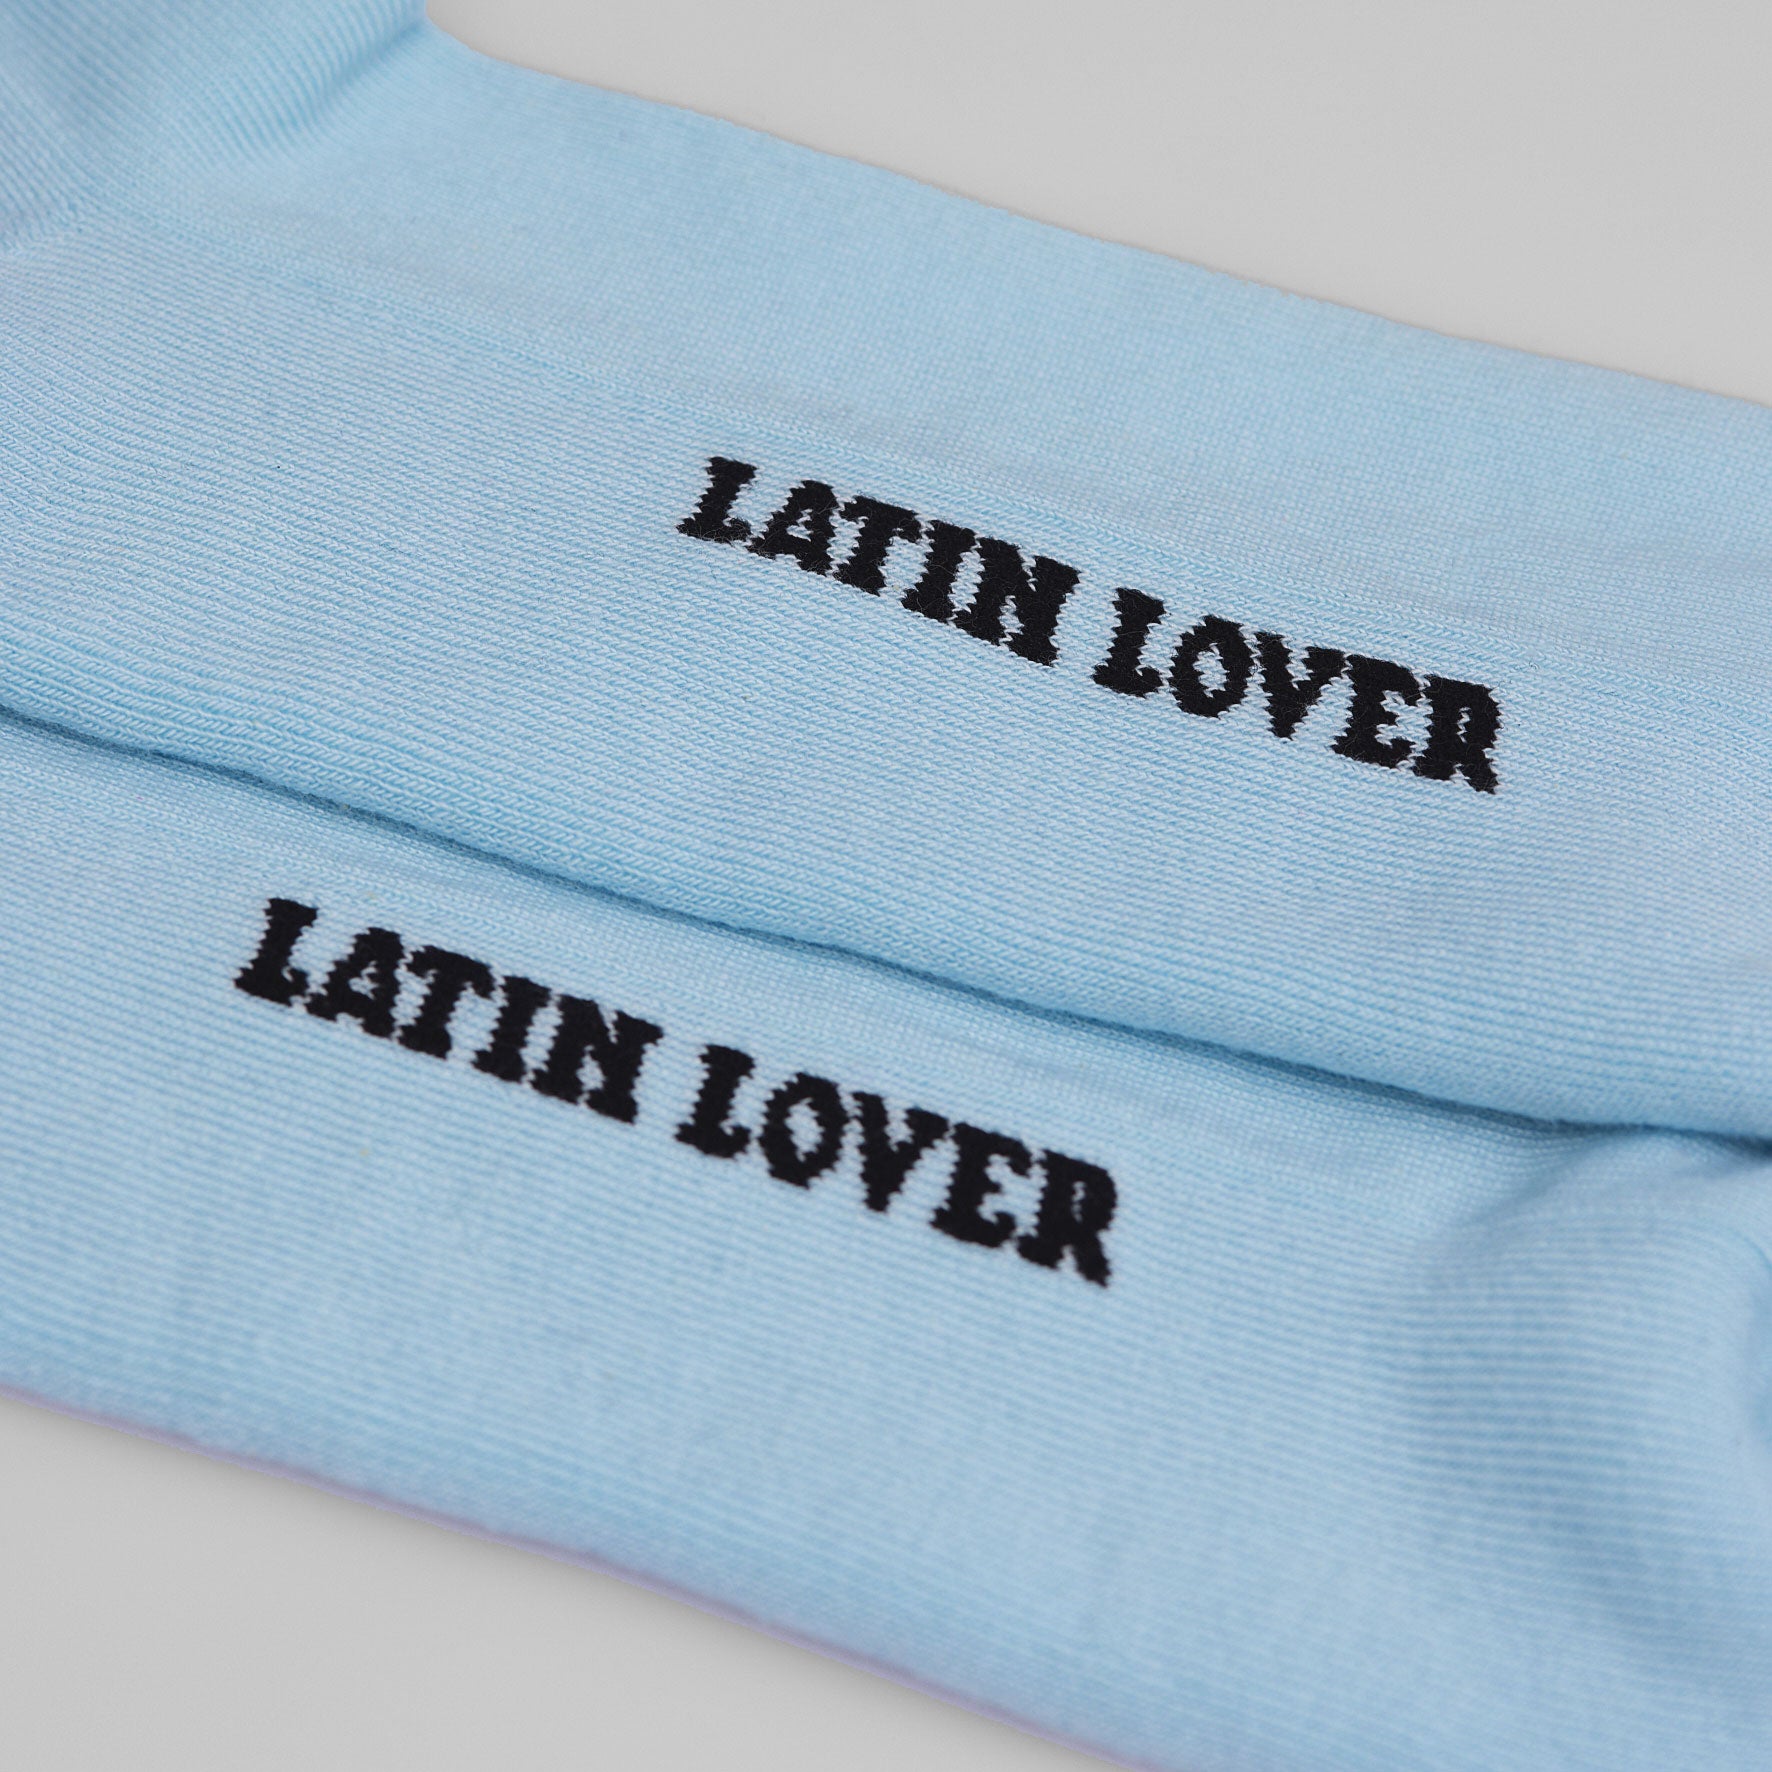 soy-latin-lover-medias-hombre-mujer-basica-light-blue.jpg